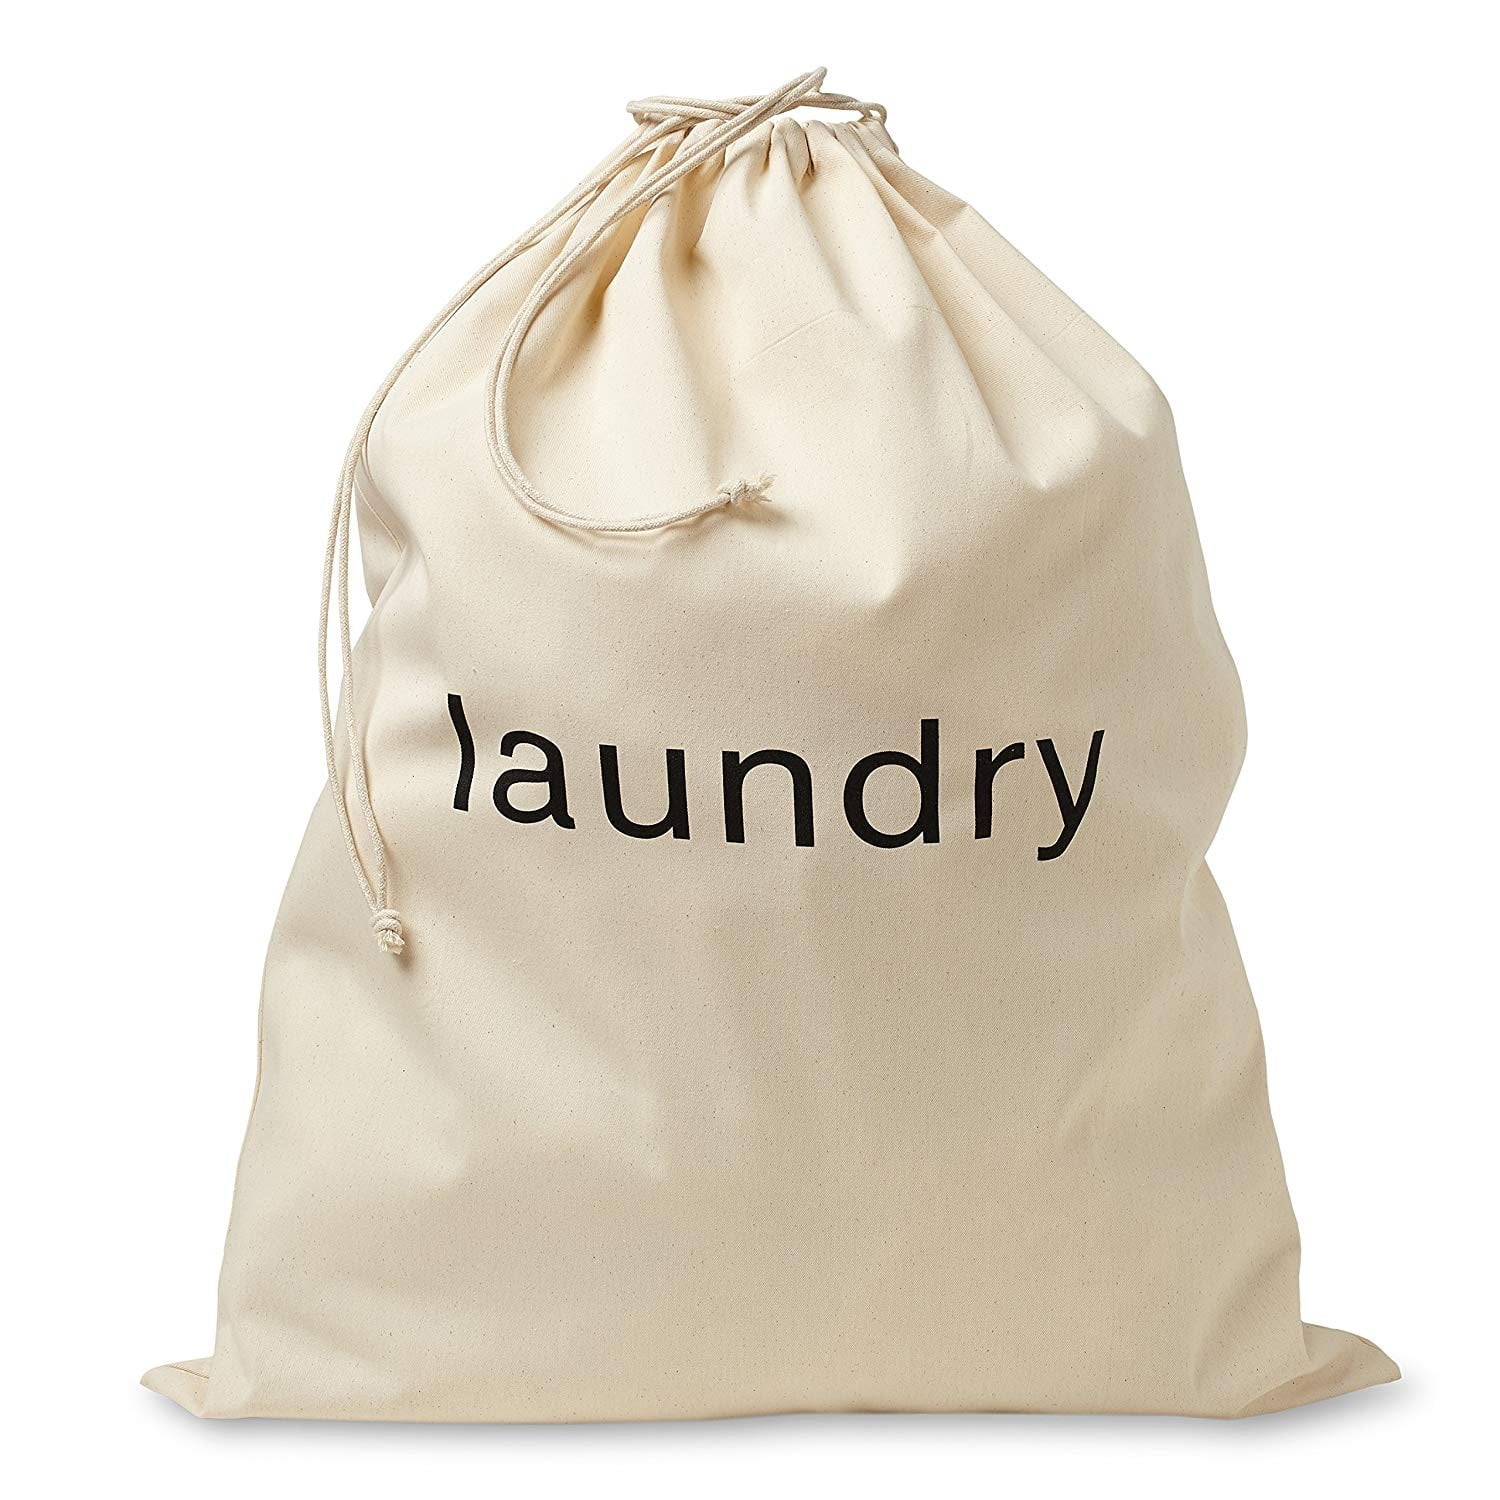 FabbPro Cotton Canvas Cloth Fabric Laundry Bag - Stylish & Portable Natural Biodegradable ...